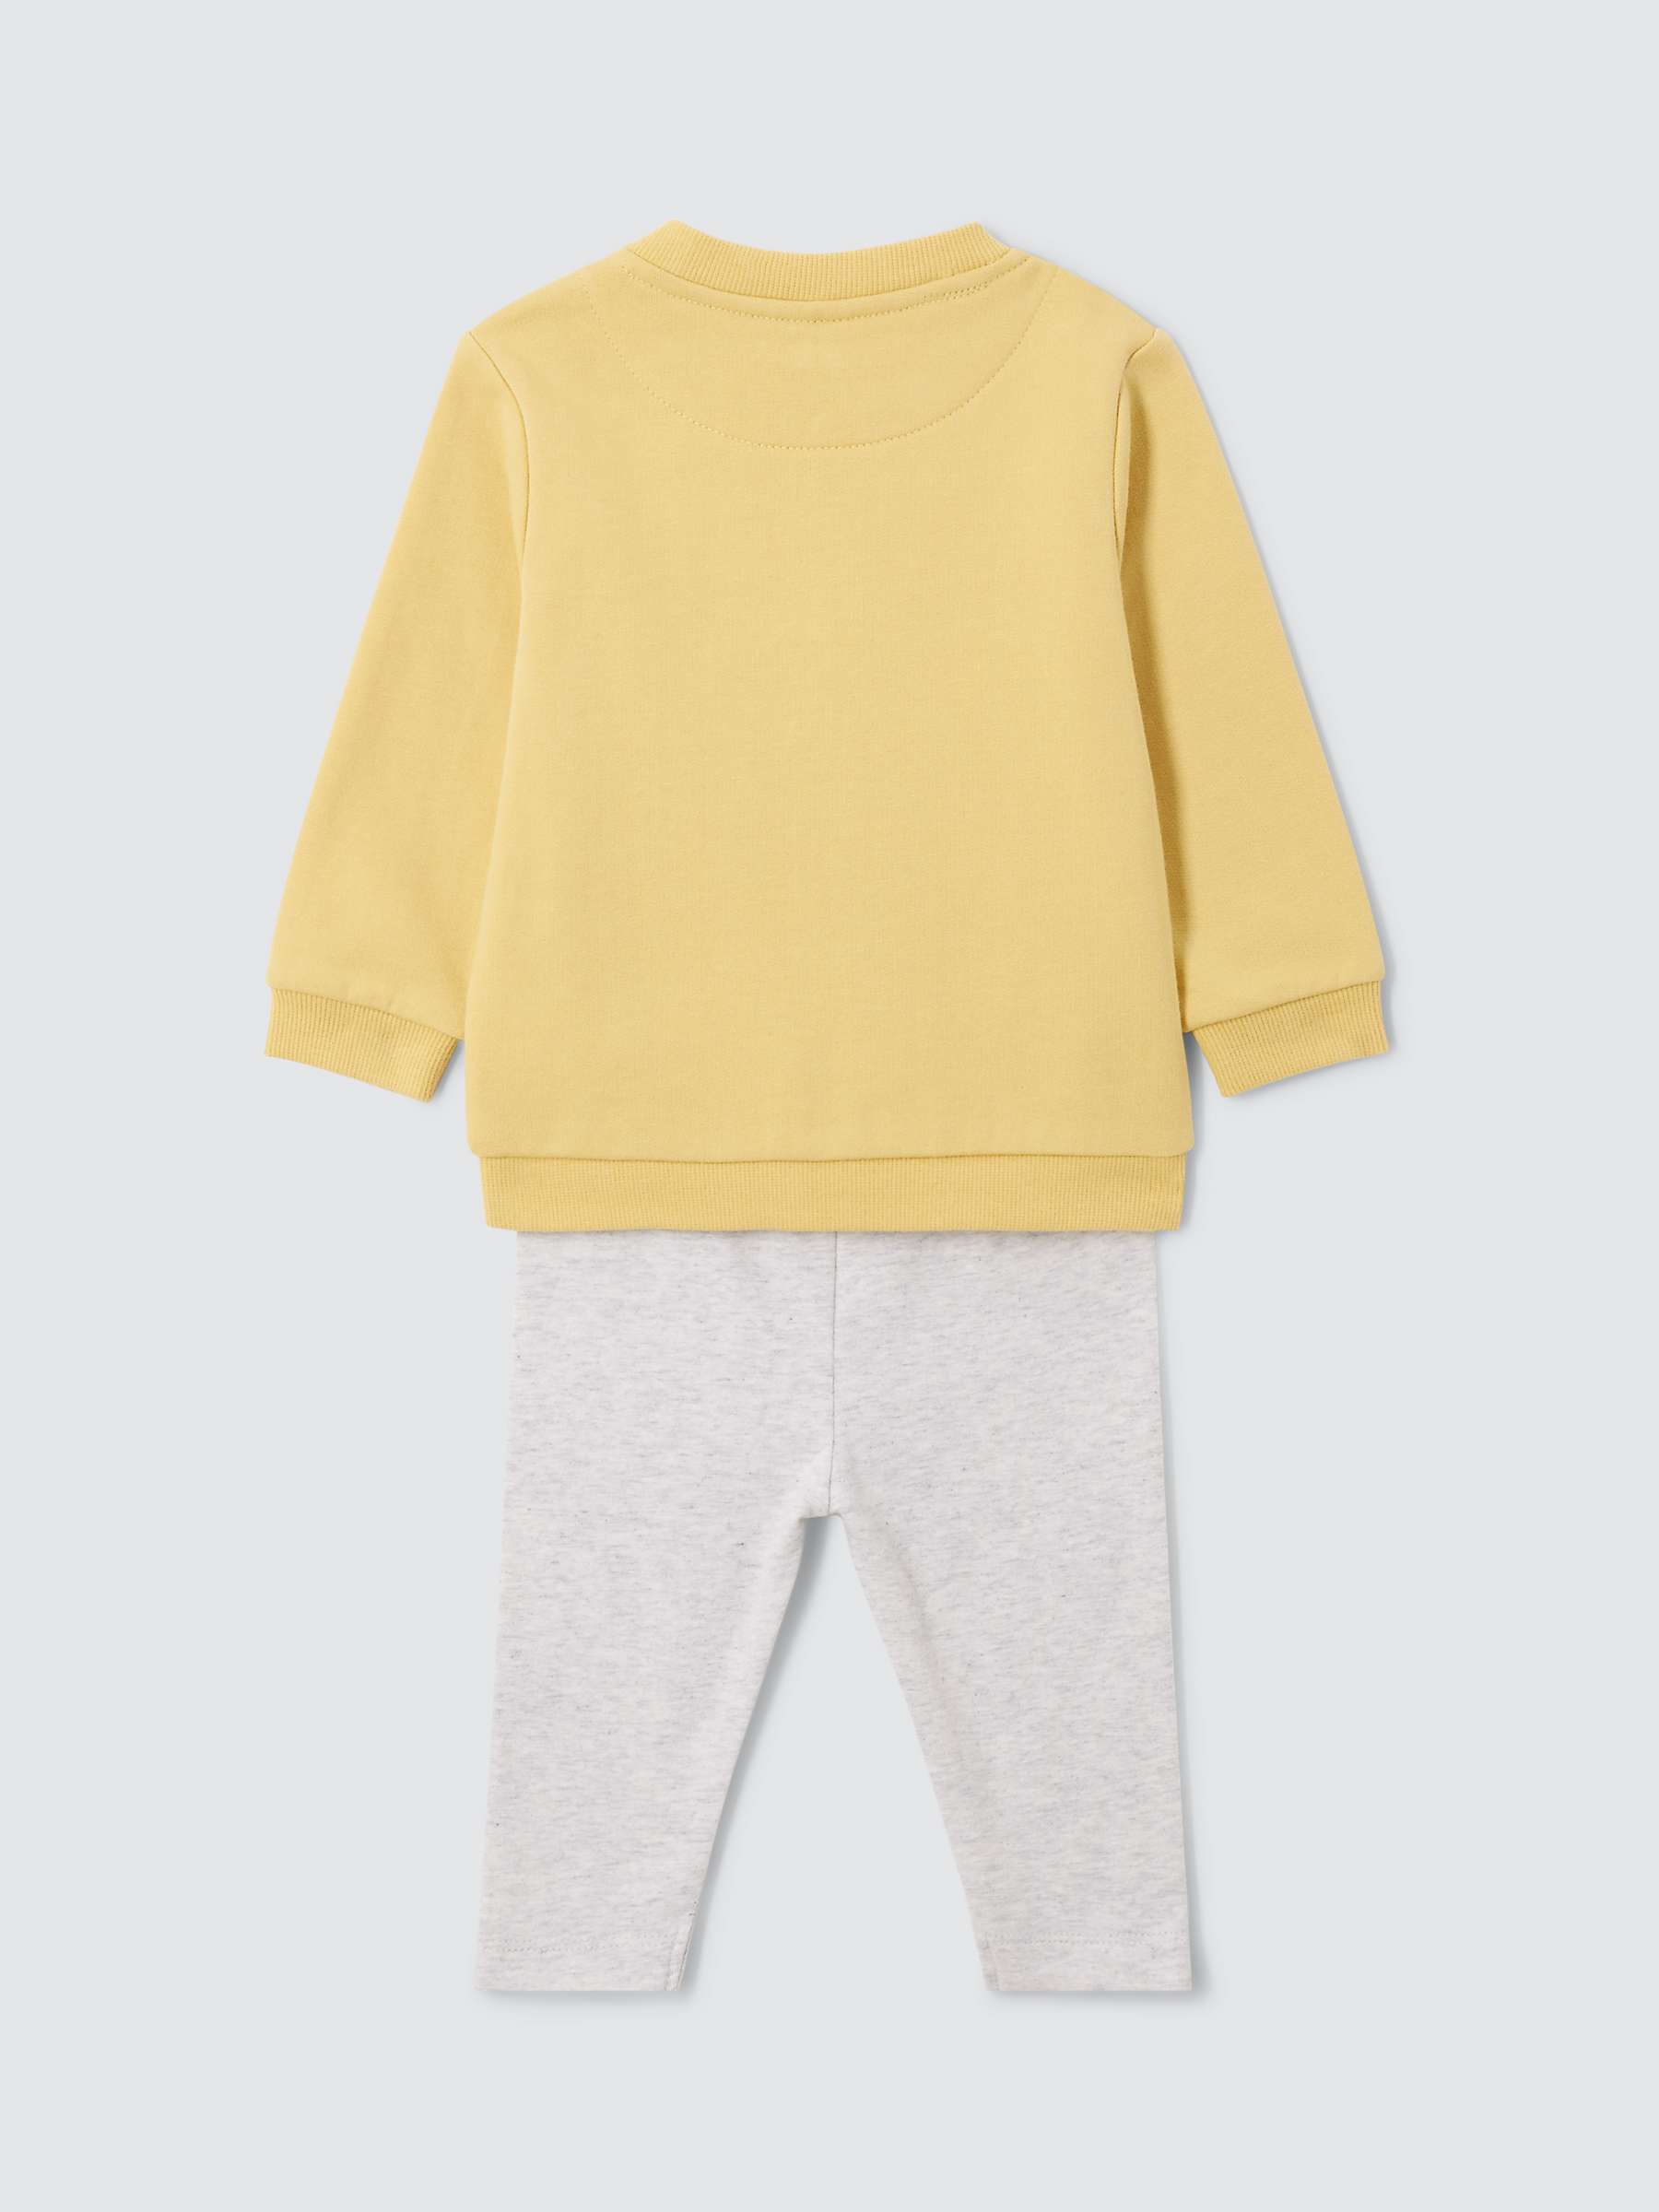 Buy John Lewis Baby Bunny Applique Sweatshirt & Leggings Set, Yellow/Multi Online at johnlewis.com